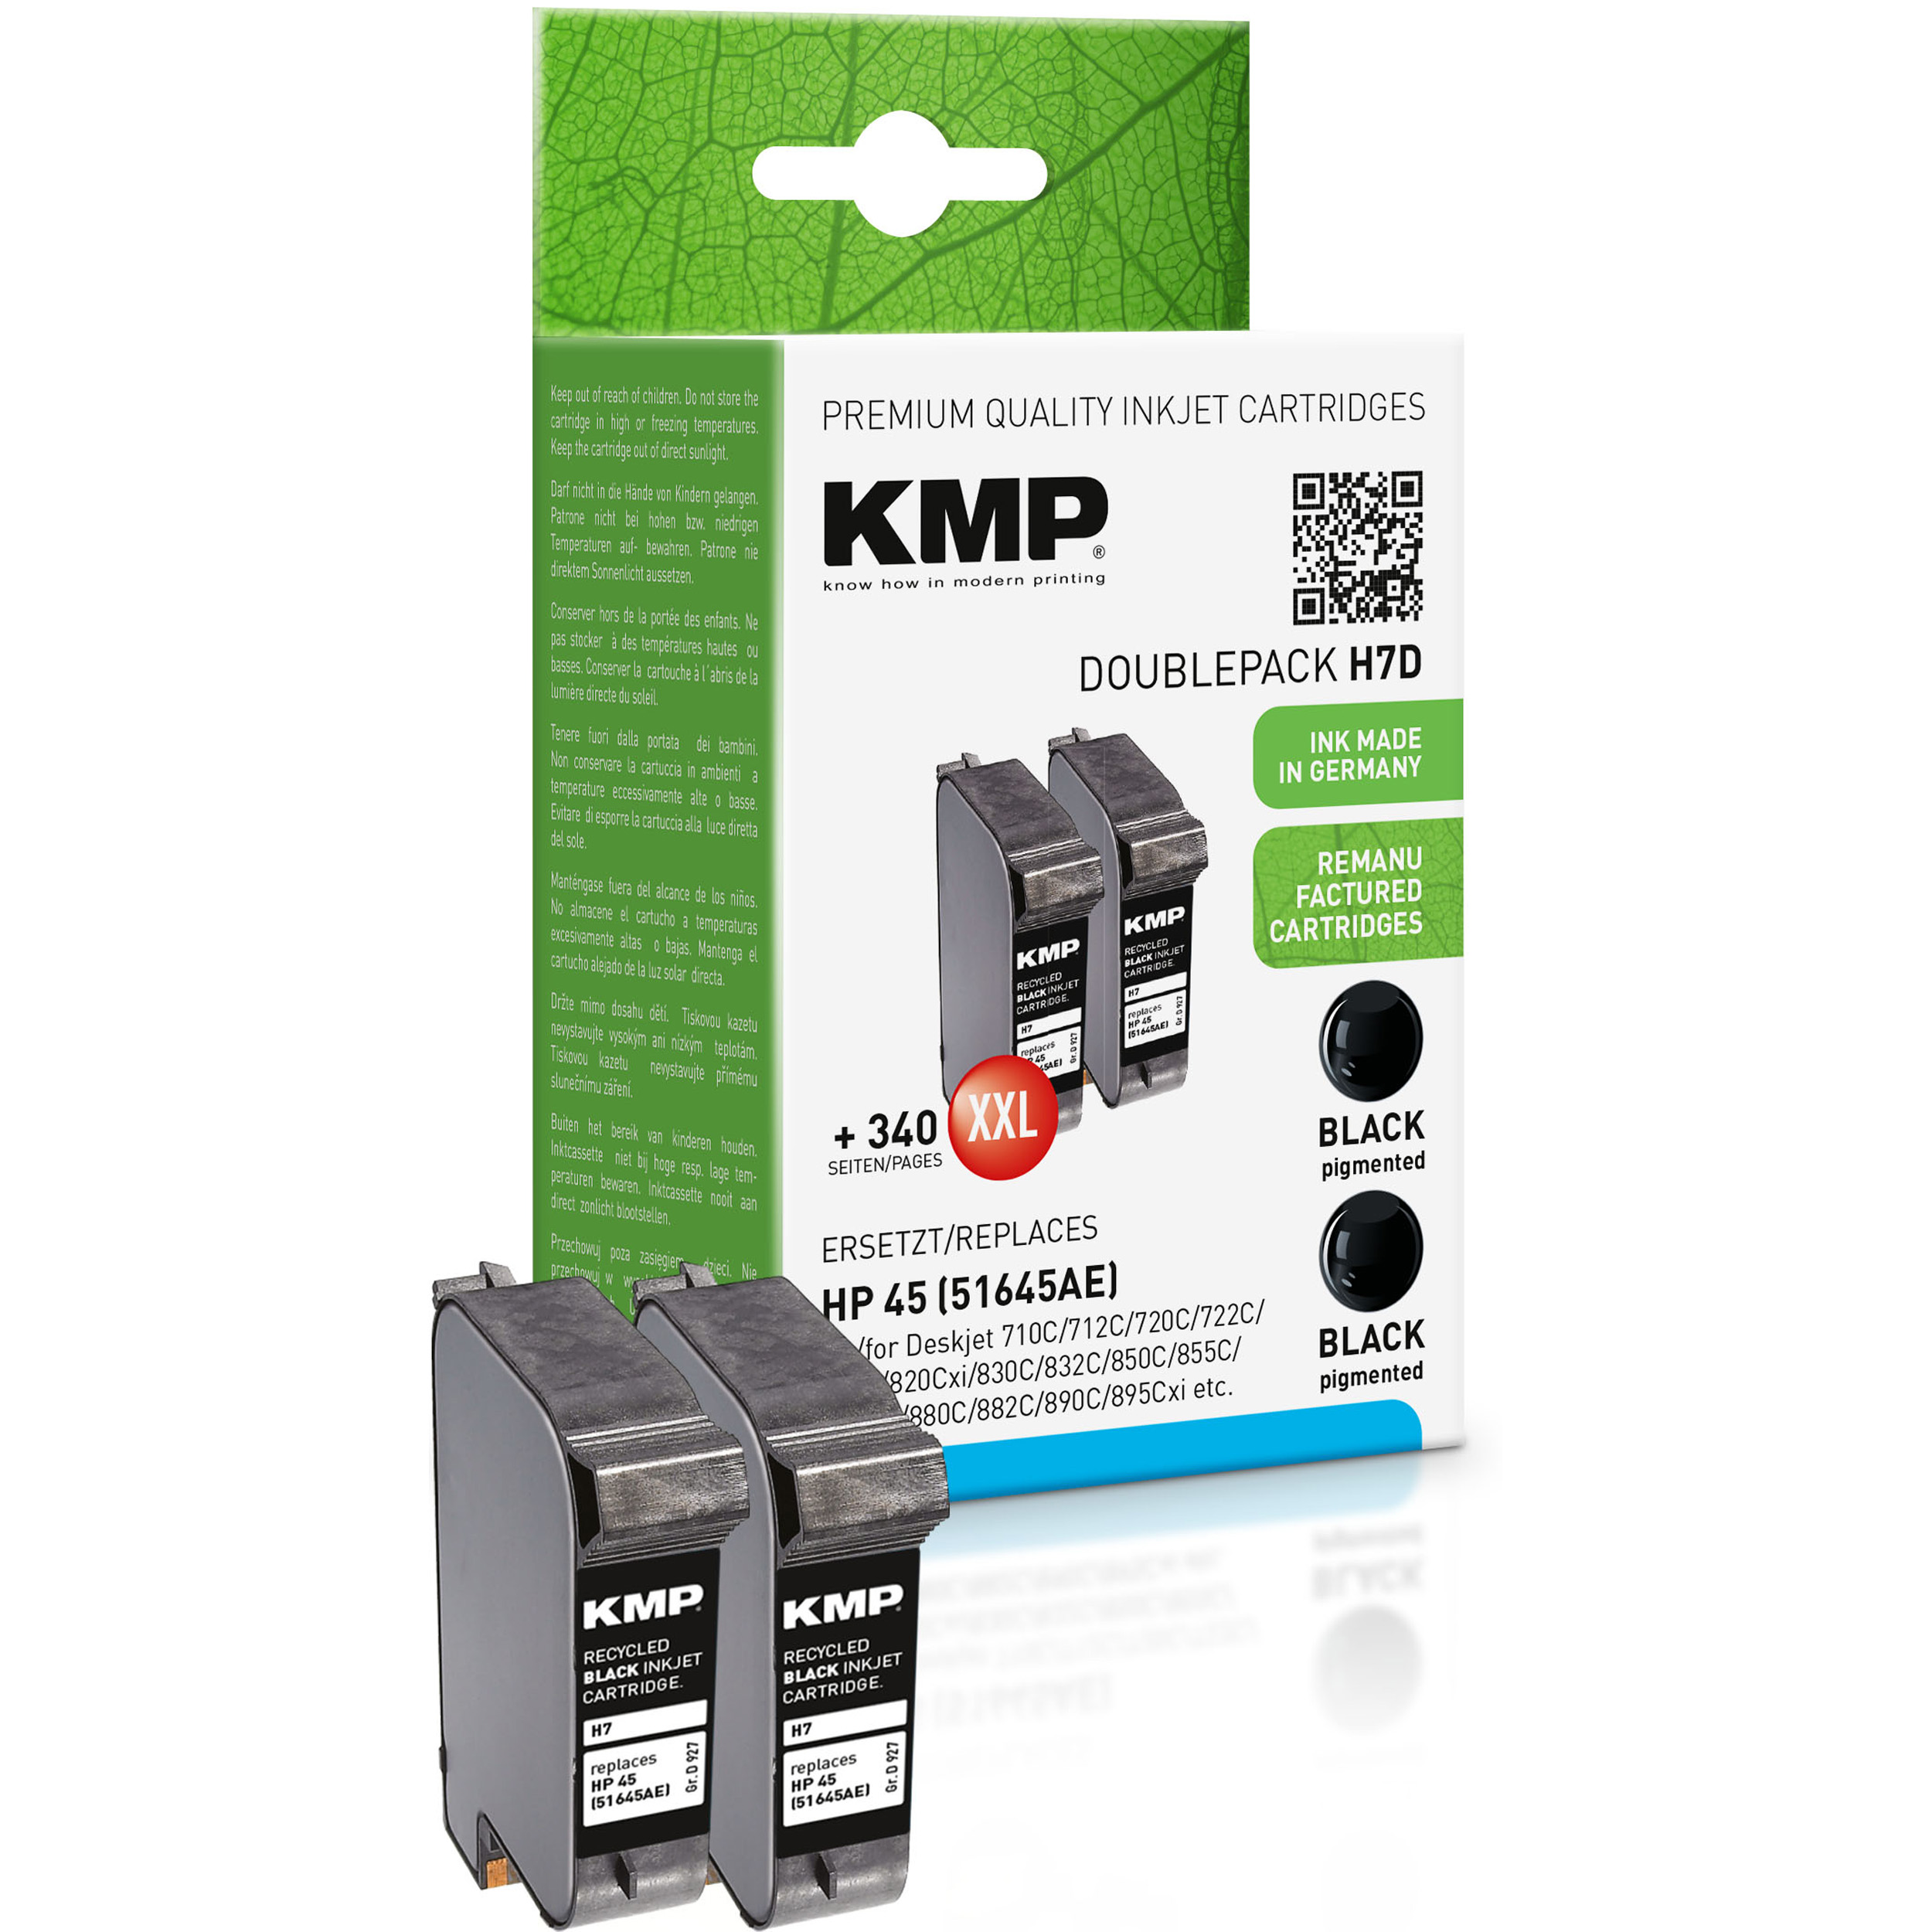 KMP Tintenpatrone für HP (51645AE) Black Cartridge Ink black 45 (51645AE) Doppelpack